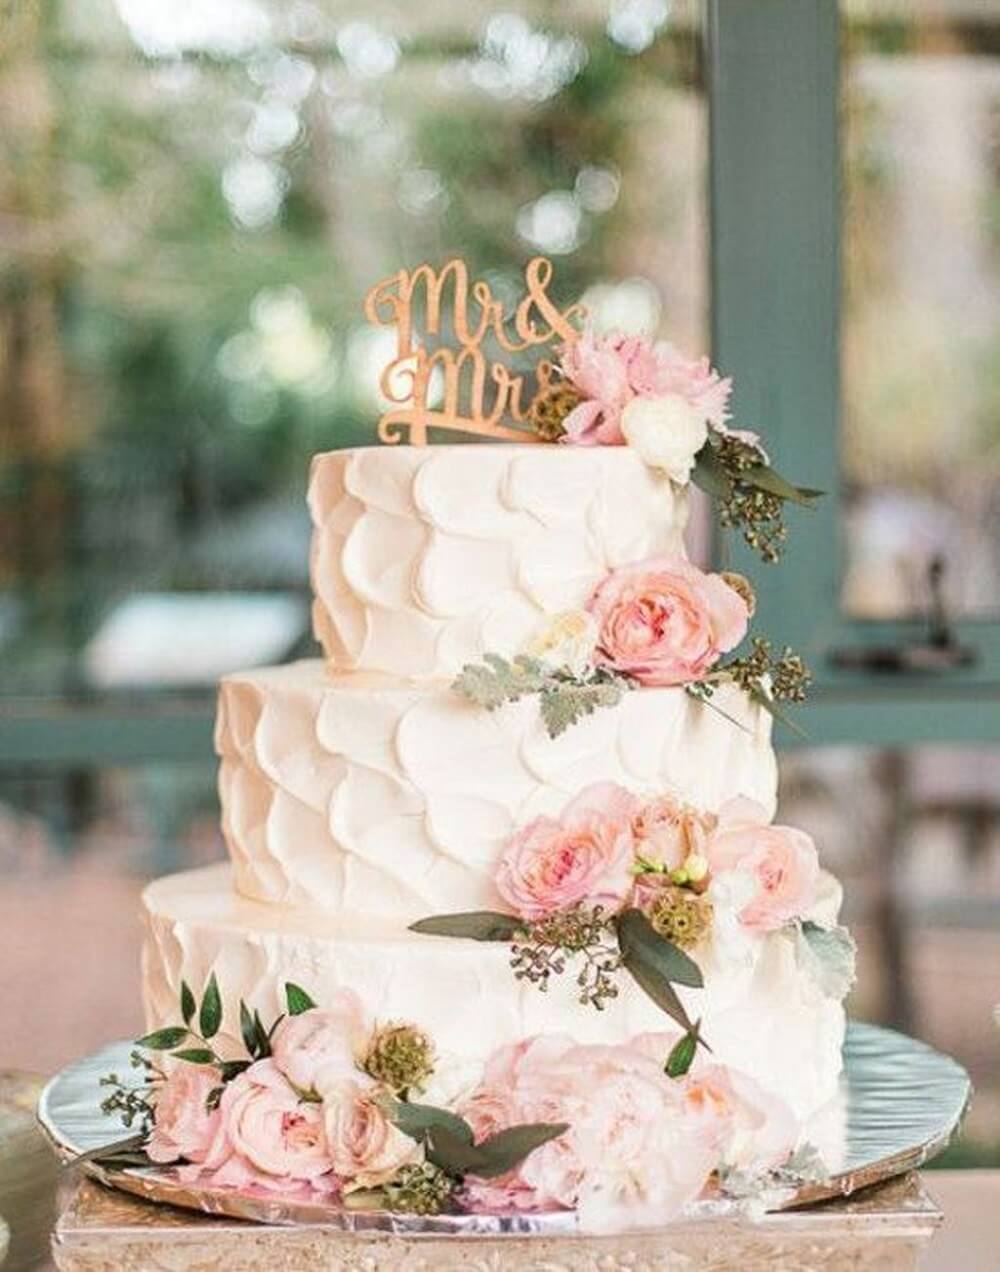 52 Lovely And Yummy Rustic Wedding Cakes - Weddingomania